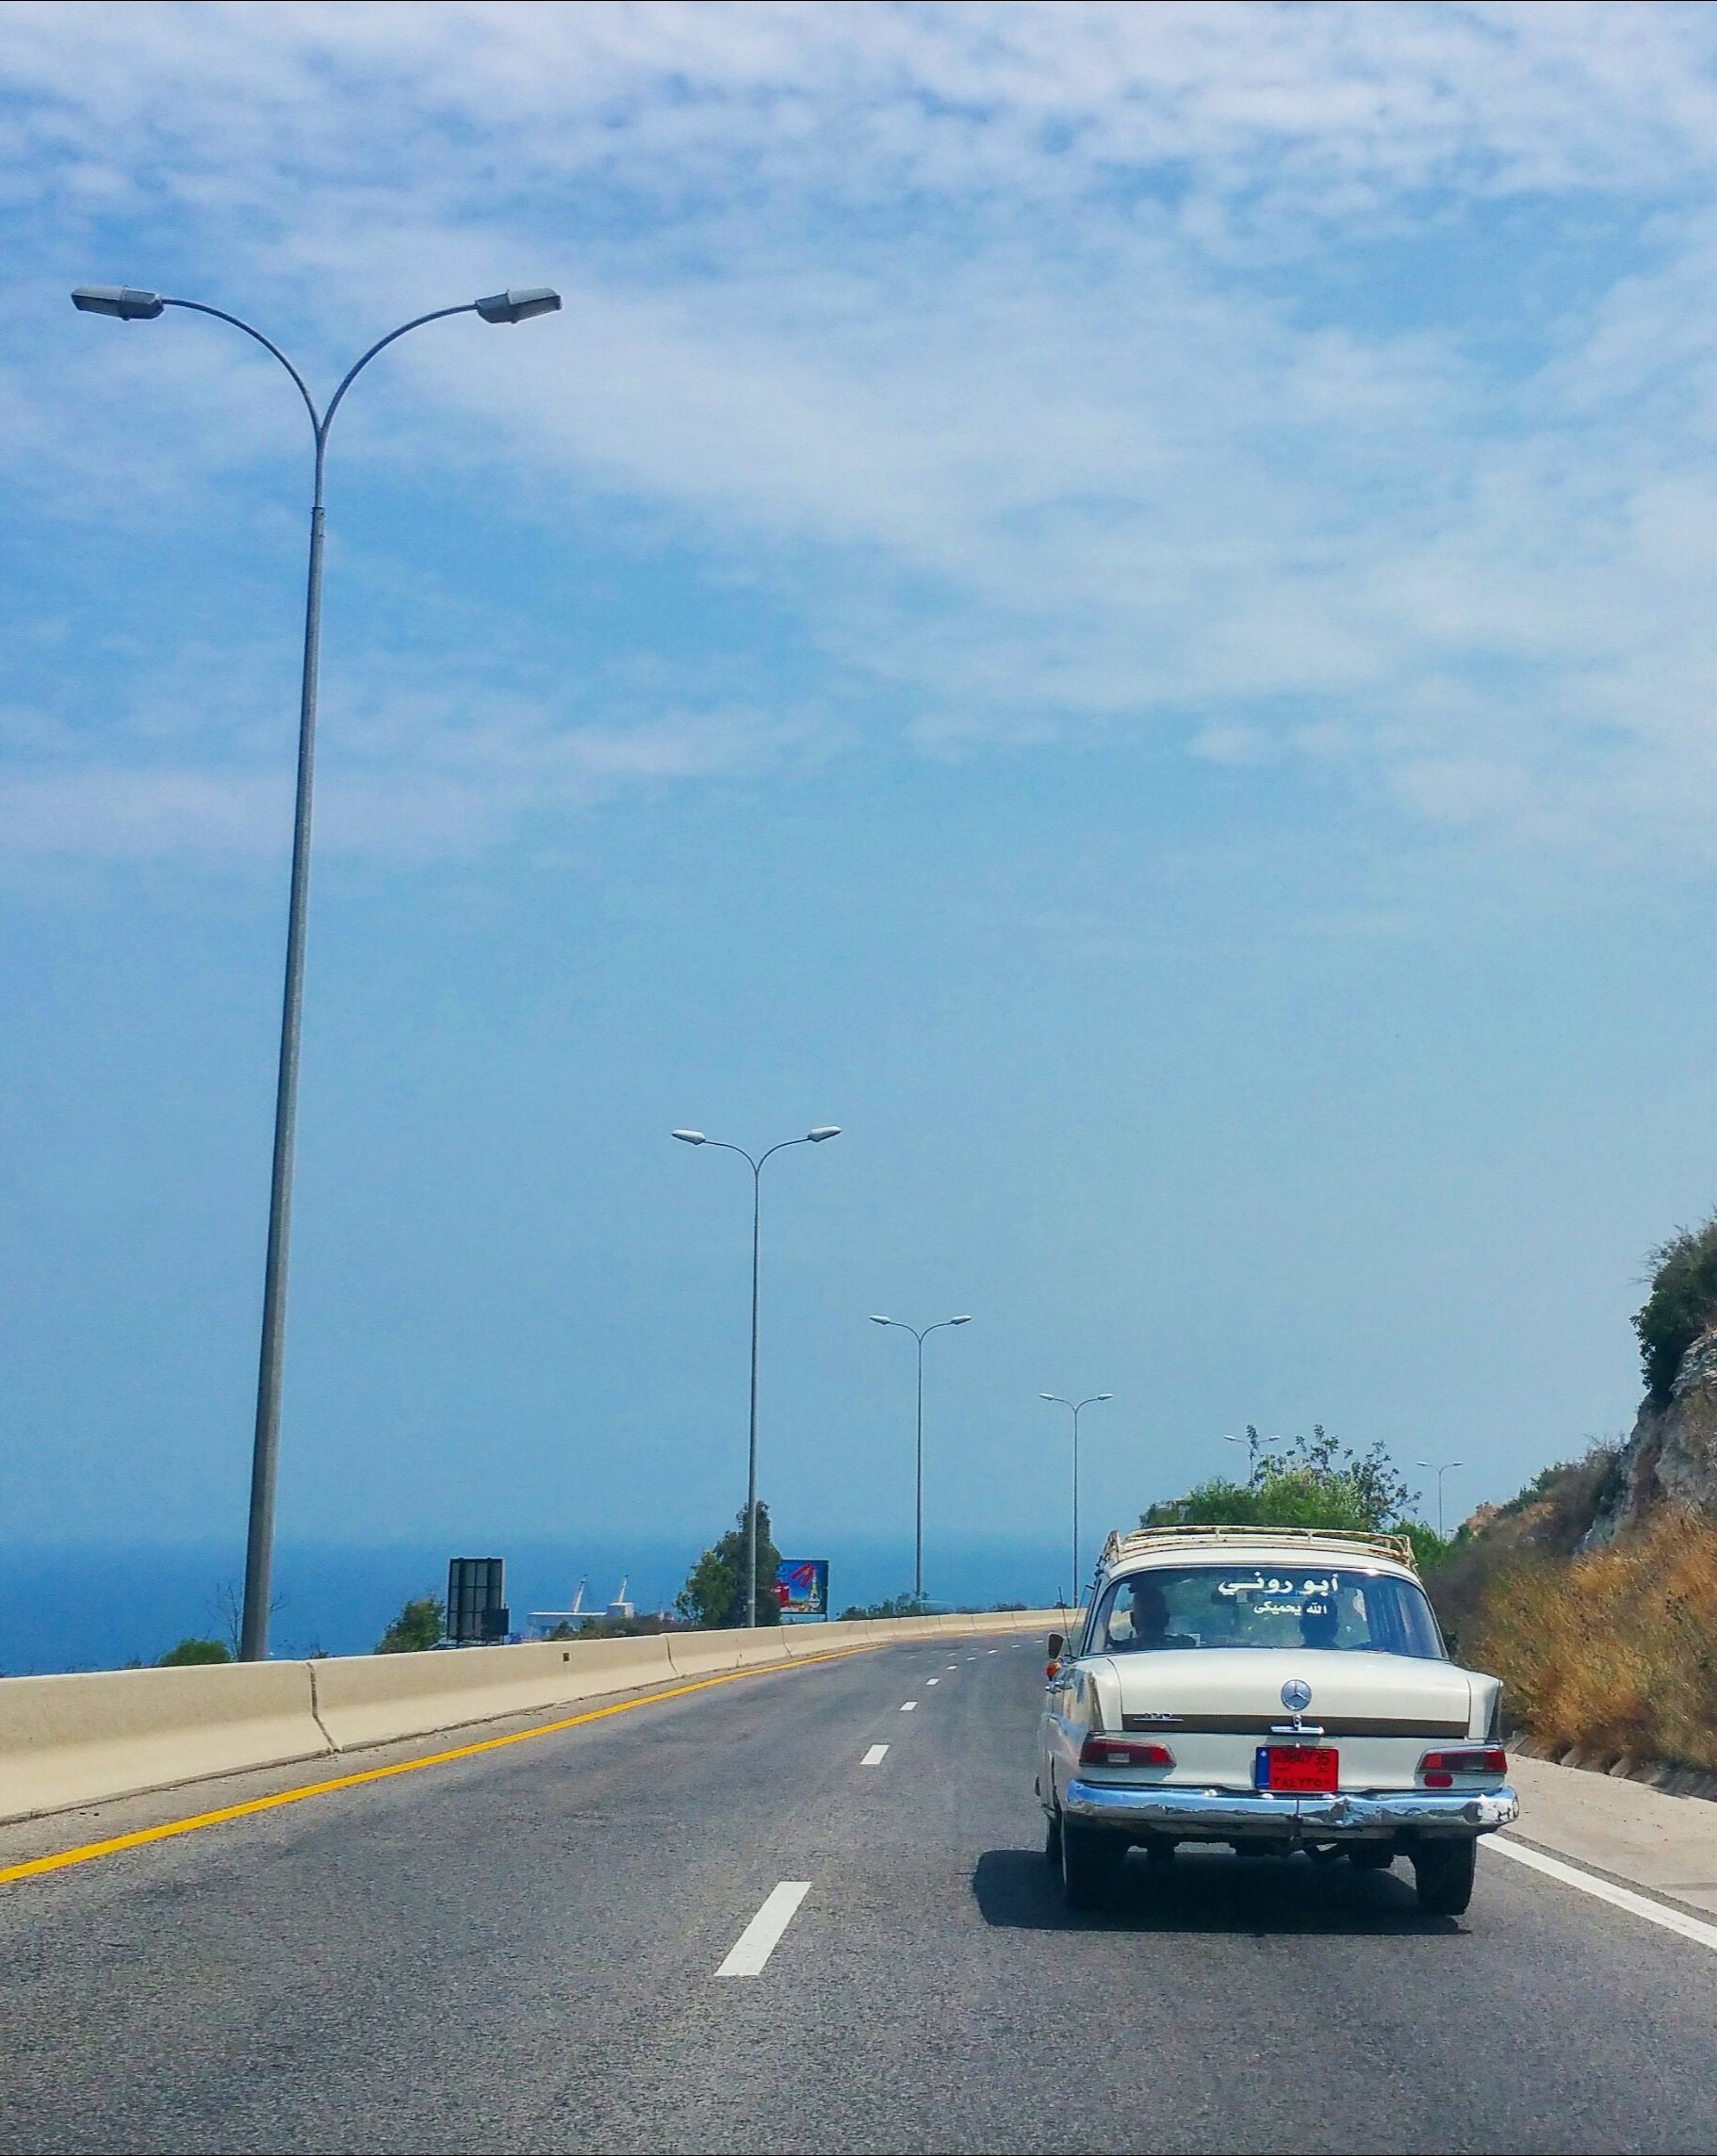 chekah-north-lebanon-road-trips-lebanon-traveler